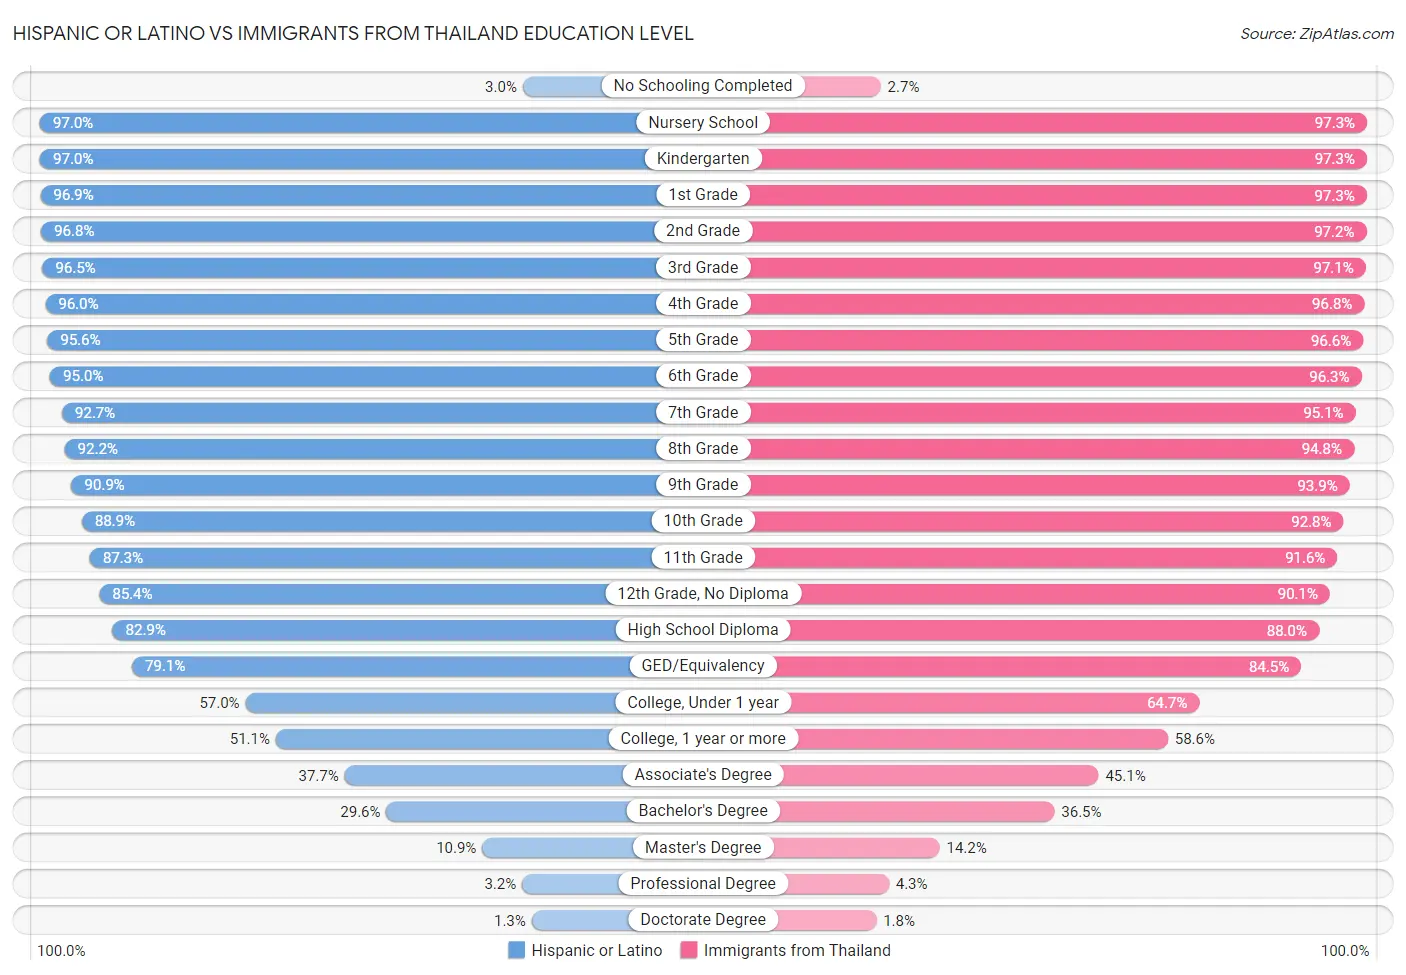 Hispanic or Latino vs Immigrants from Thailand Education Level